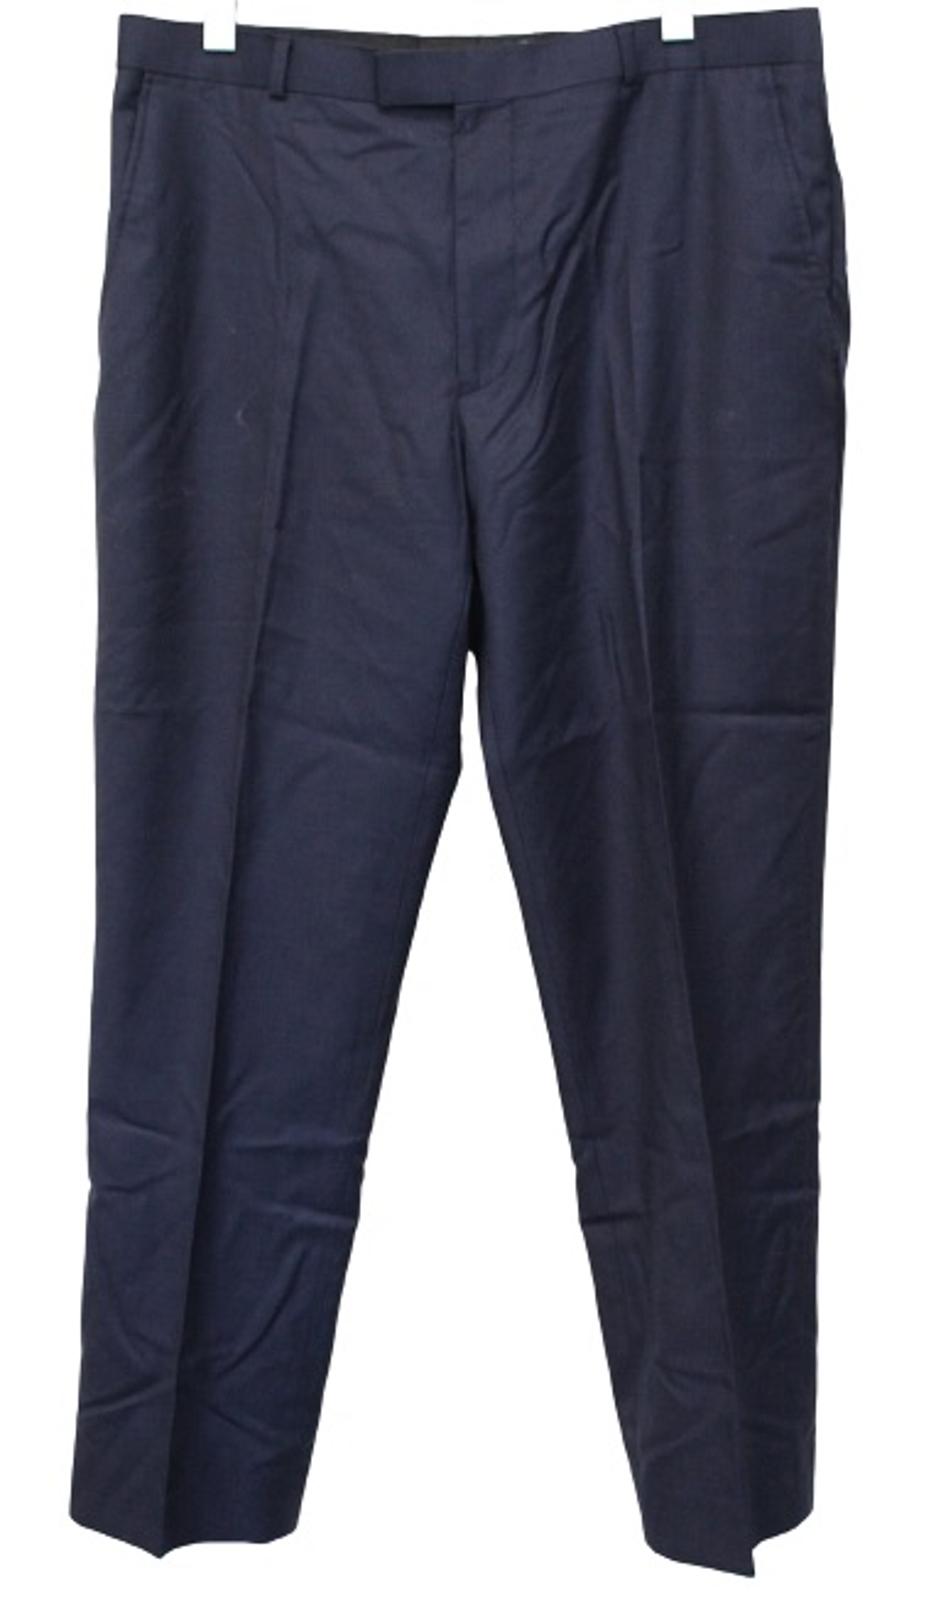 AUSTIN REED Men's Navy Blue Zip Fly Pure Wool Suit Trousers Size 36S W36 L29